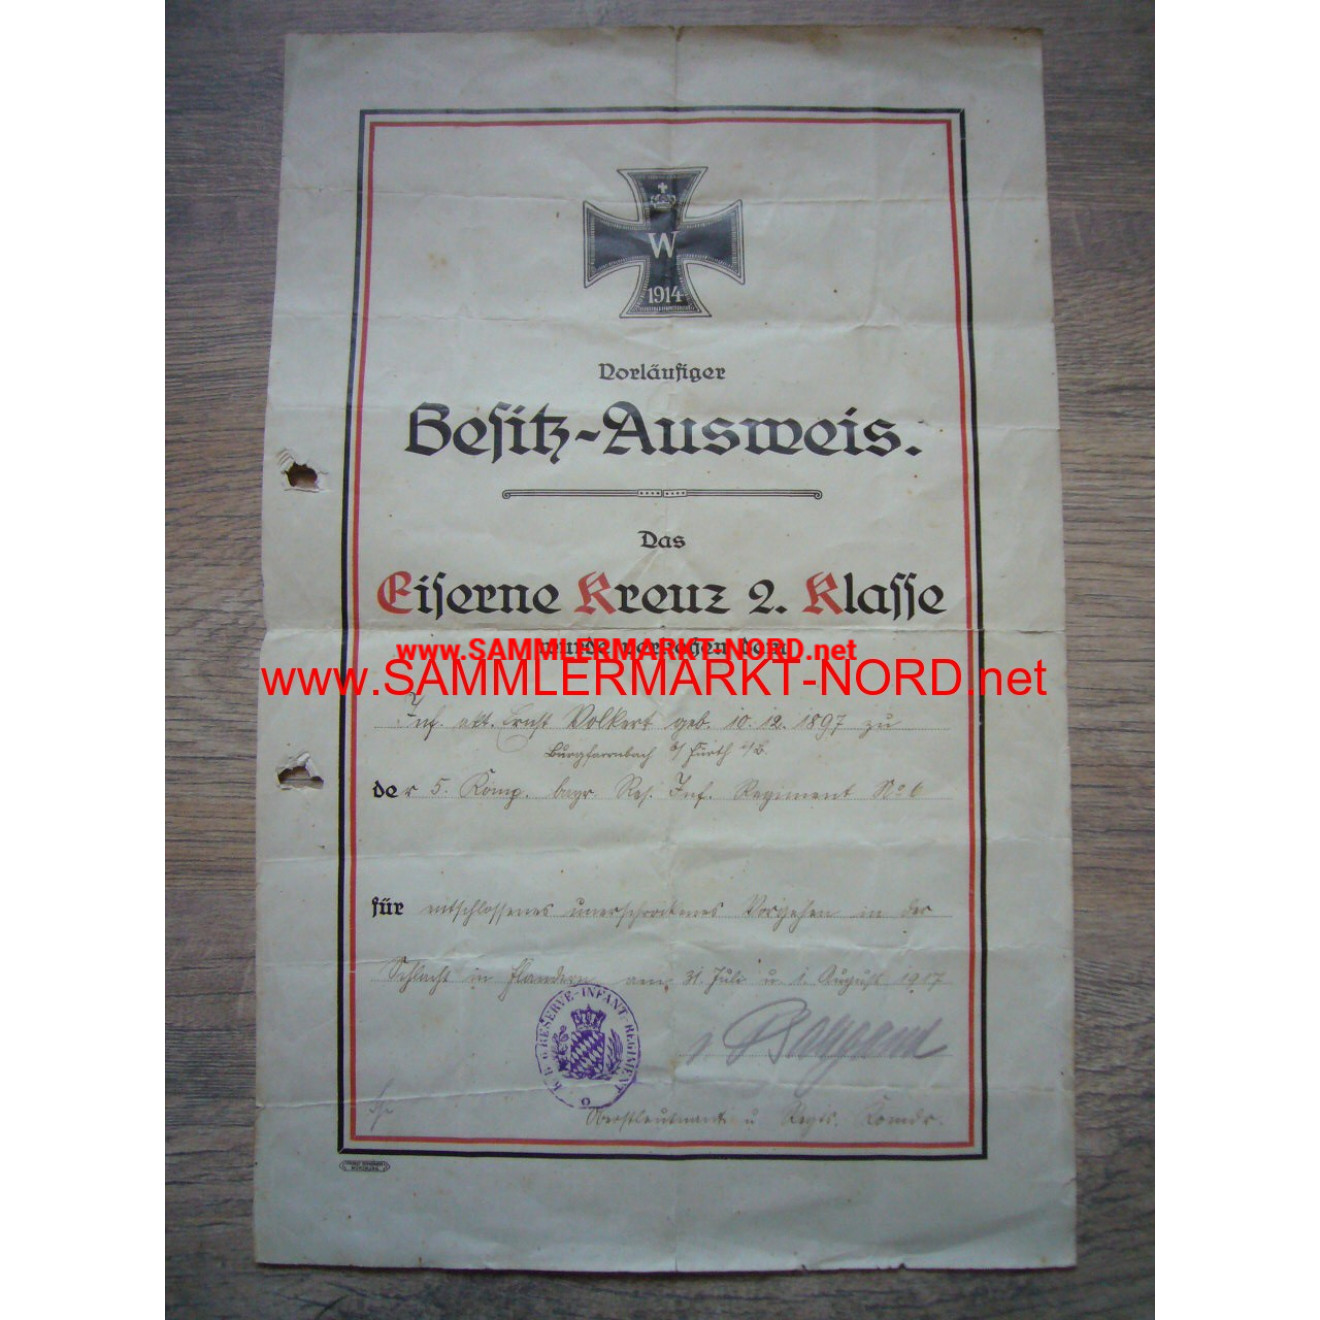 Certificate of the Iron Cross - Flanders 1917